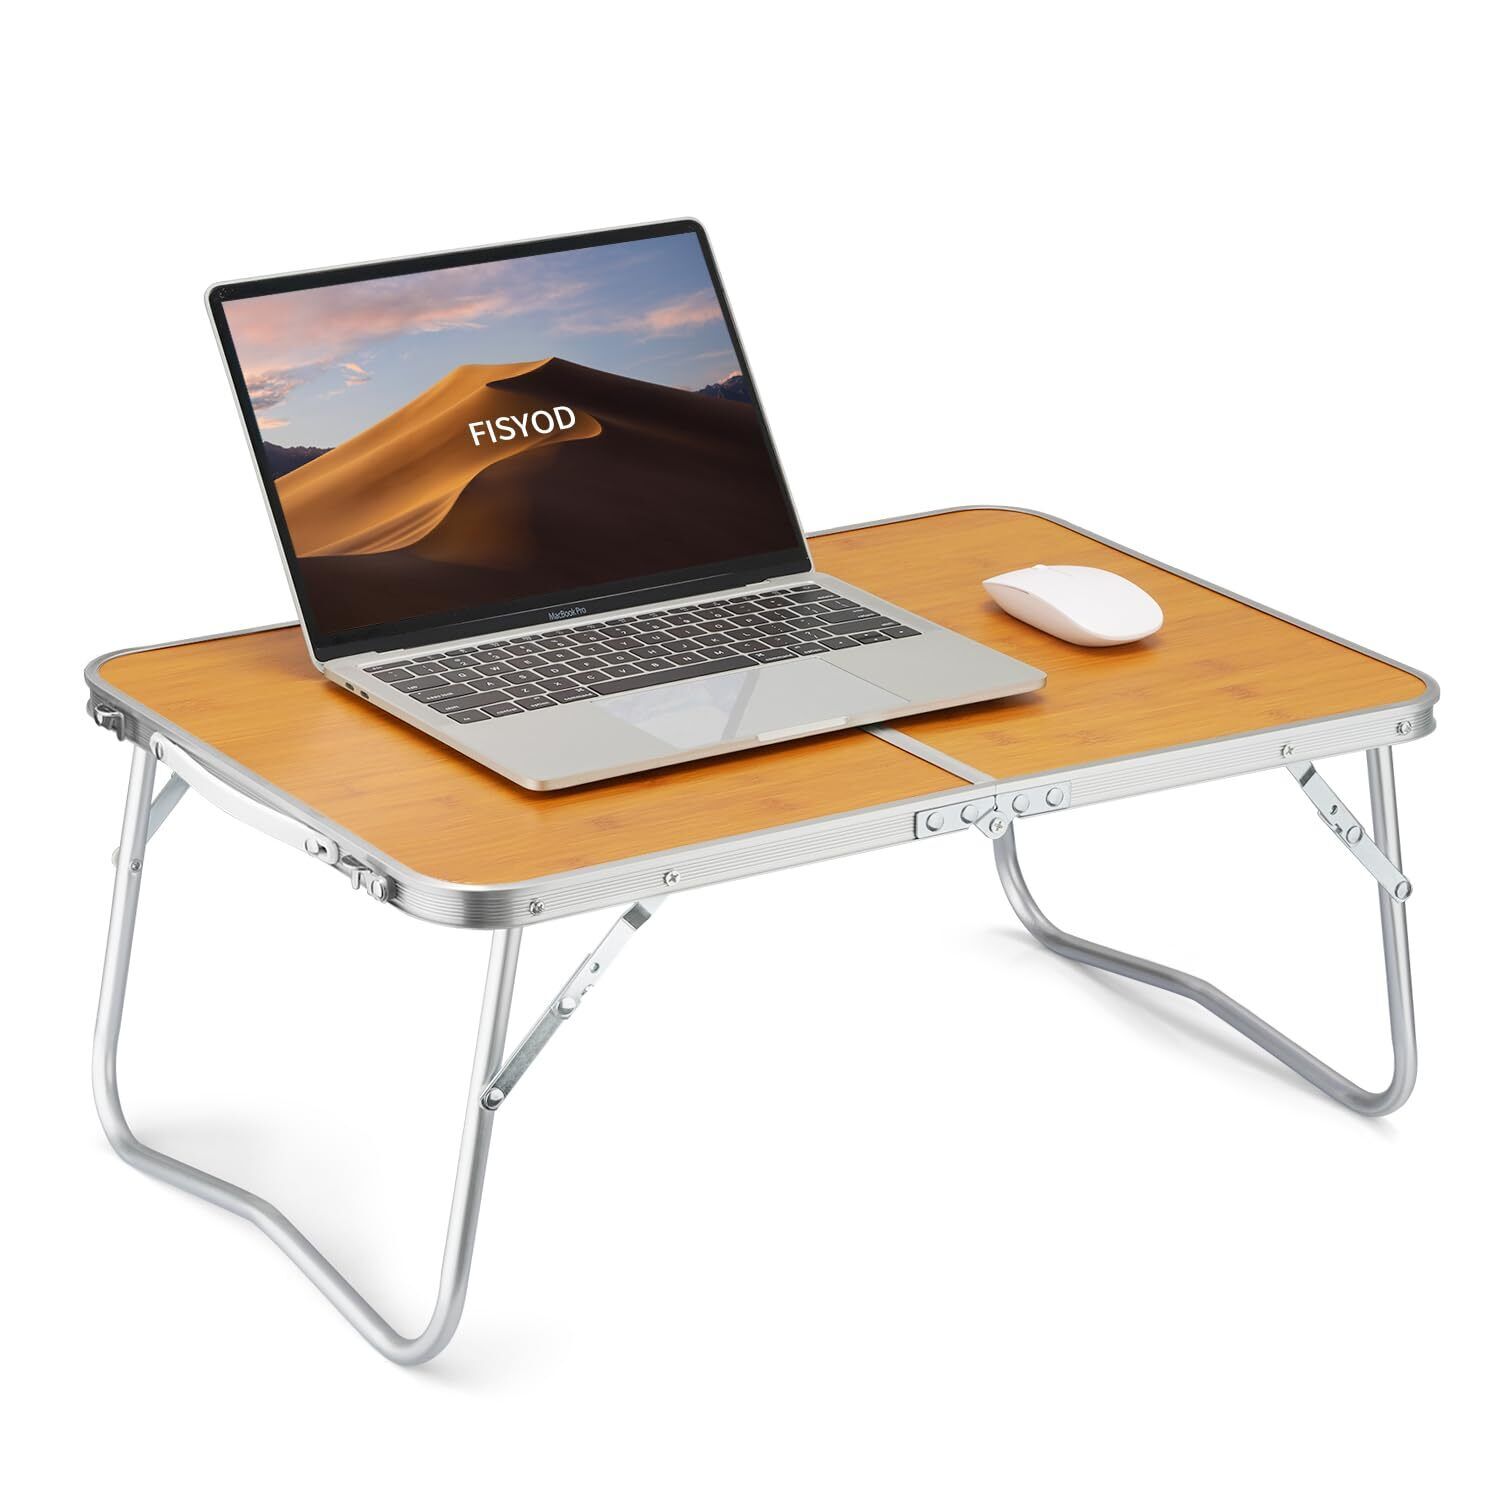 FISYOD Folding Laptop Table, Bed Table Lap Desk, Breakfast Tray Table,